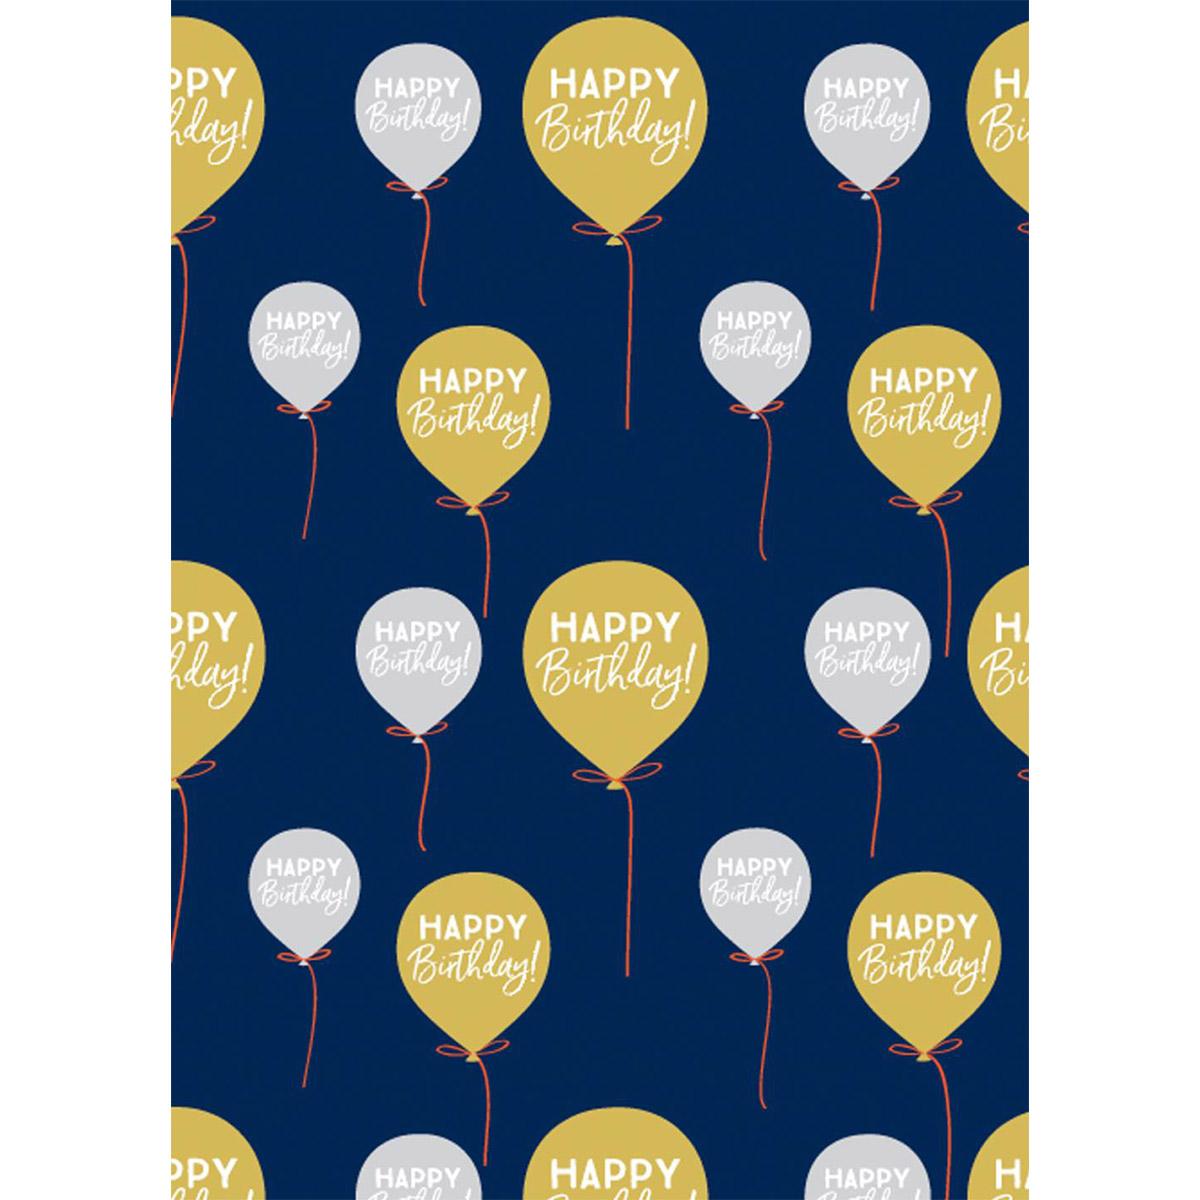 Luxury Gift Wrap - Happy Birthday Balloons Image